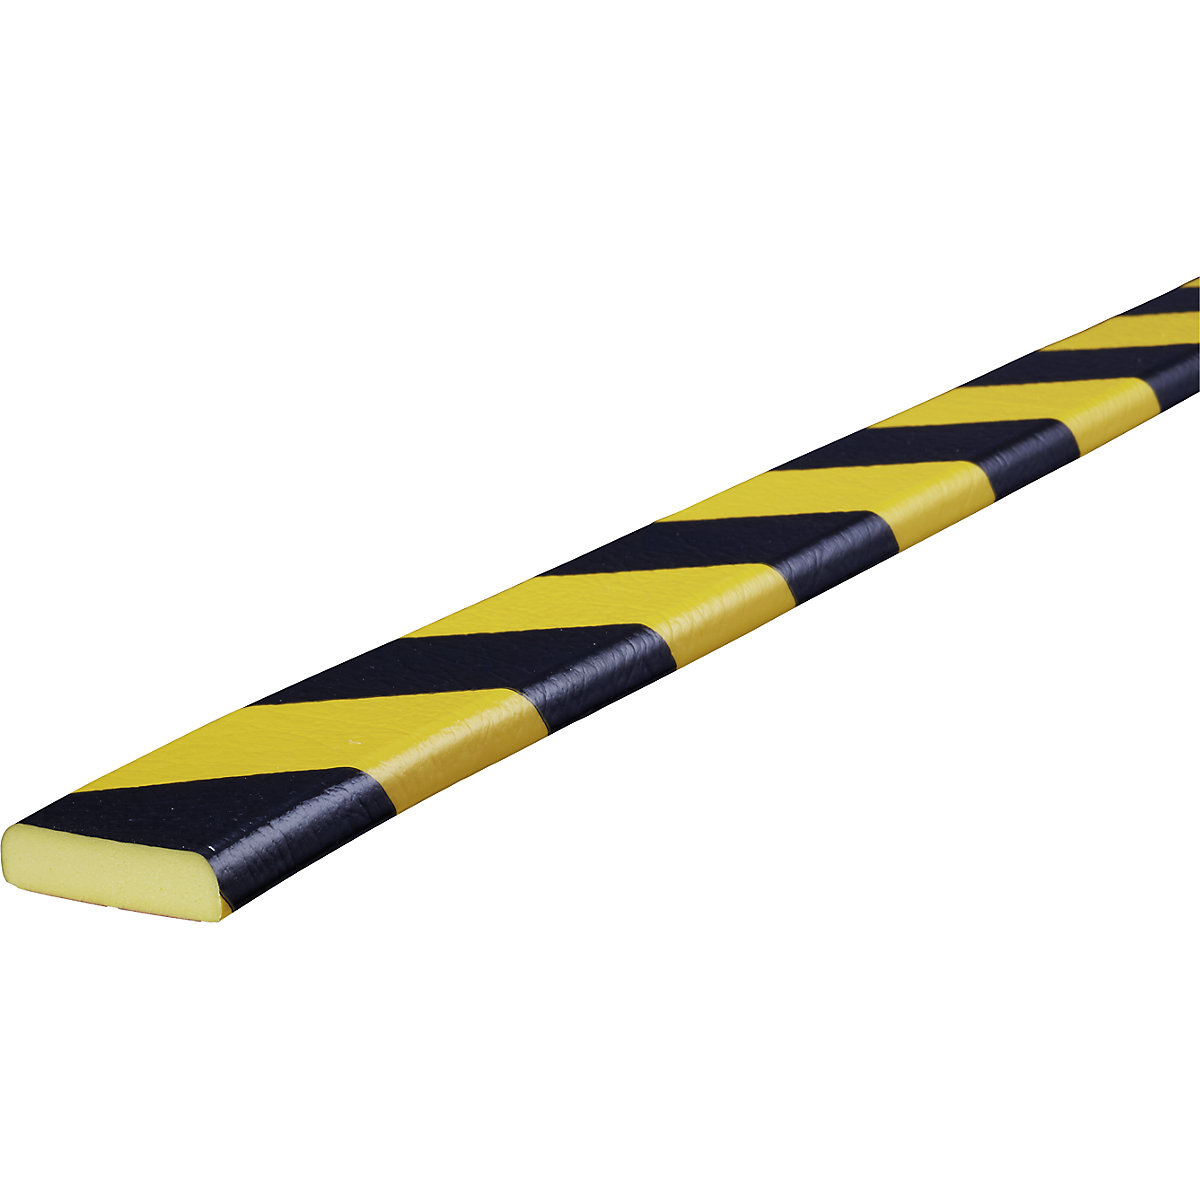 Knuffi®-oppervlaktebescherming – SHG, type F, herbruikbaar, stuk van 1 m, zwart/geel-18